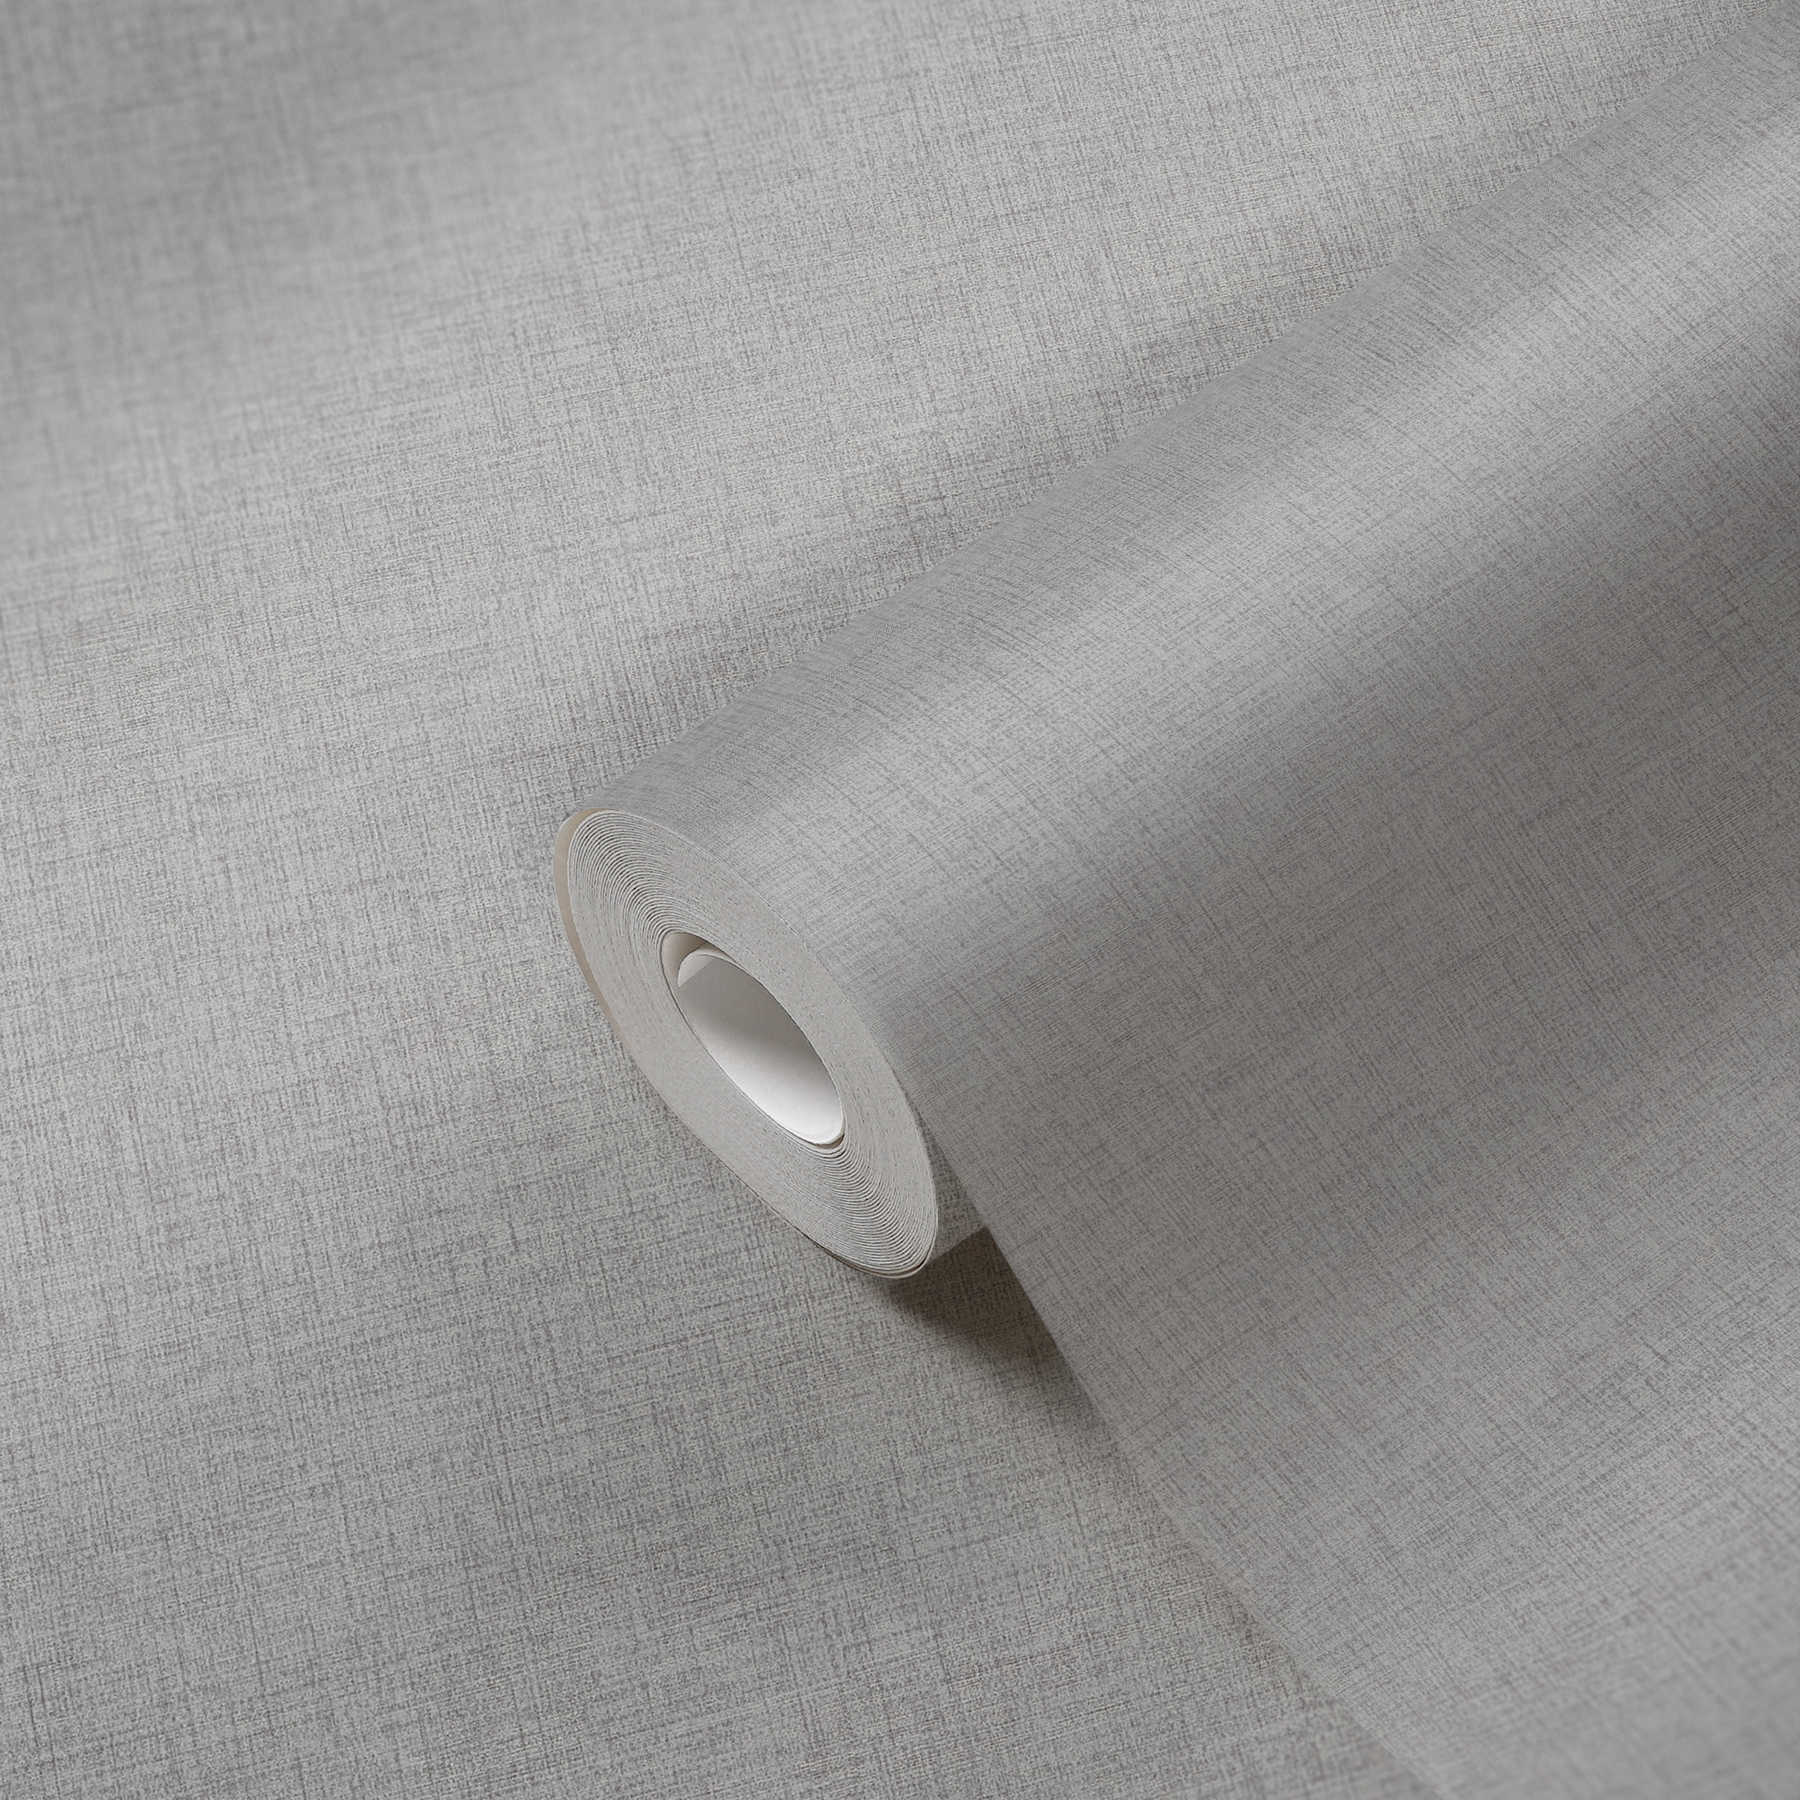             Plain wallpaper with subtle linen look - grey
        